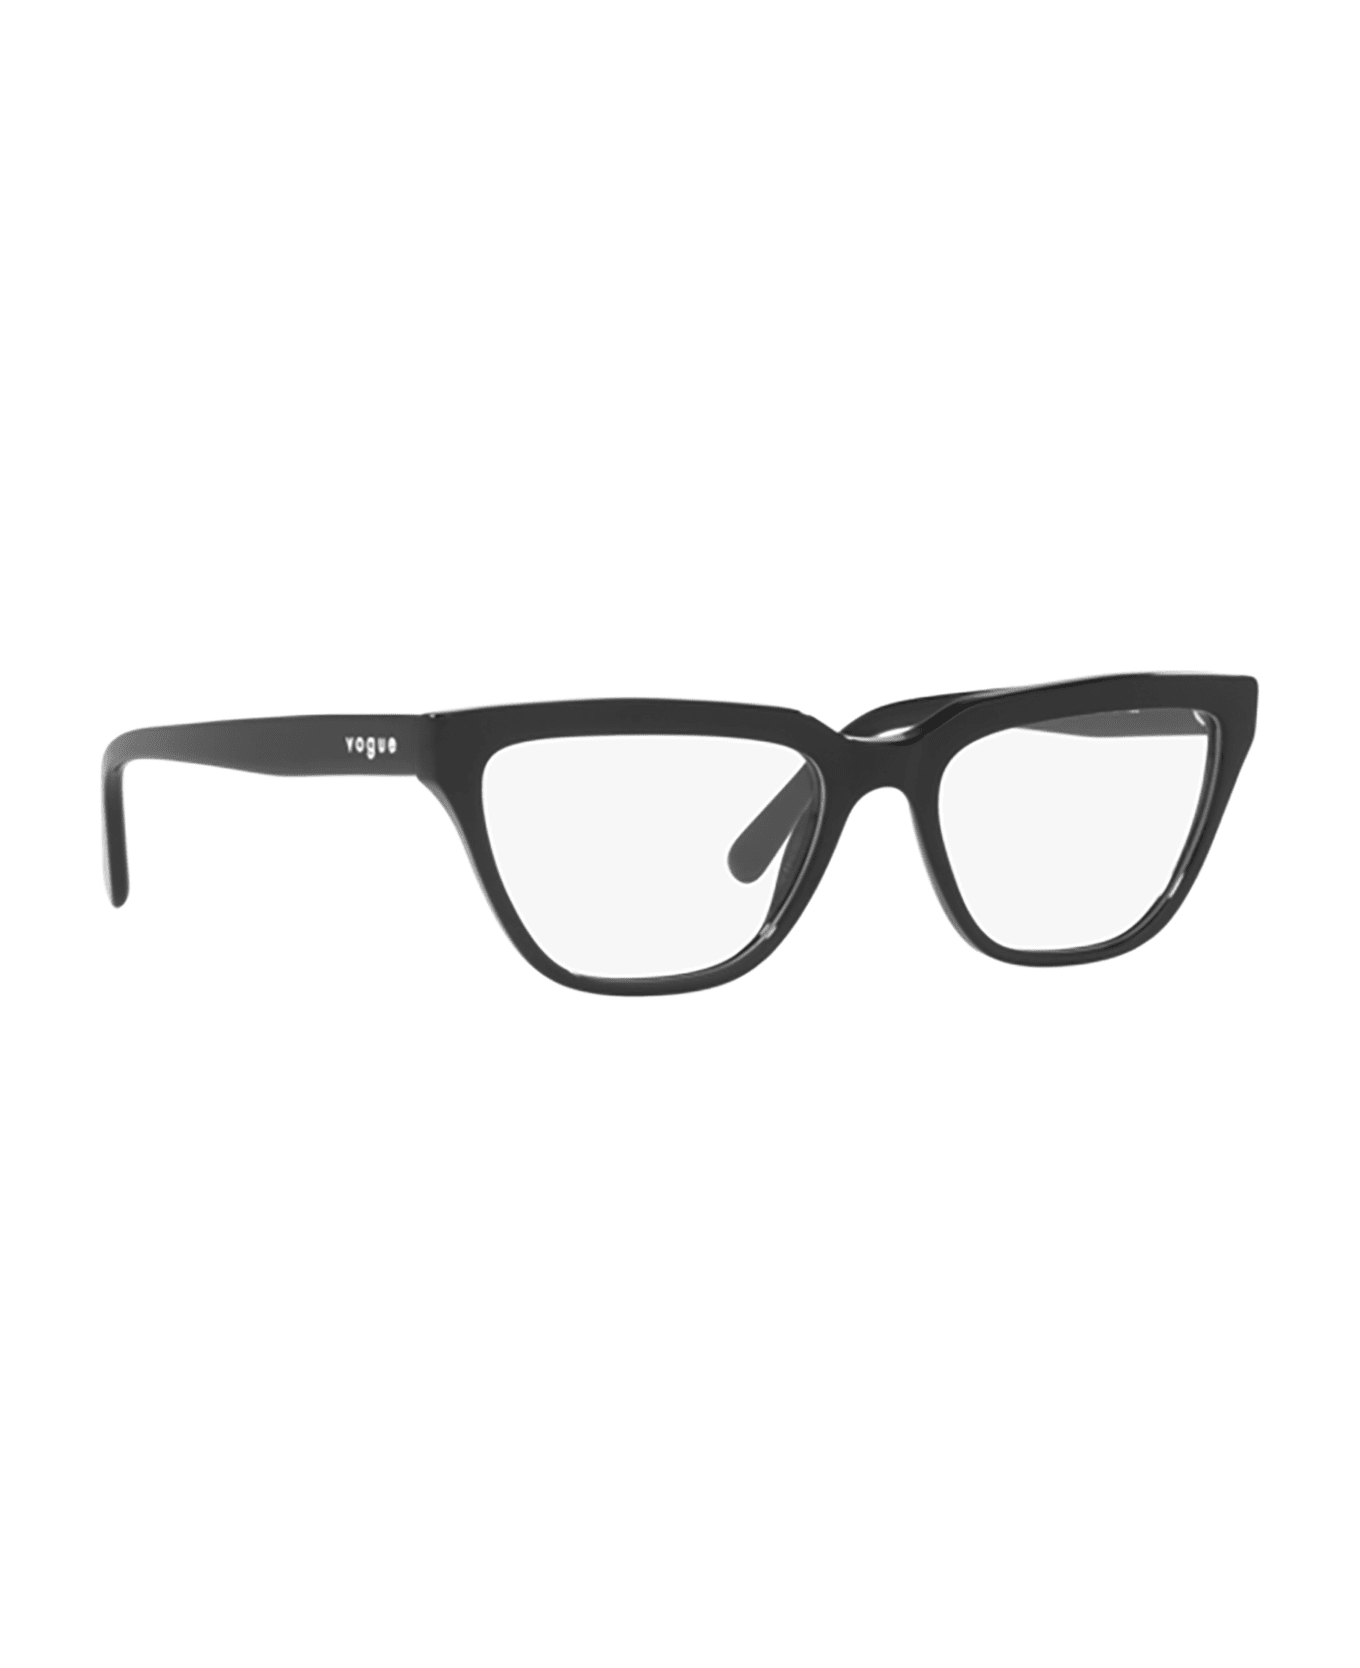 Vogue Eyewear Vo5443 Black Glasses - Black アイウェア